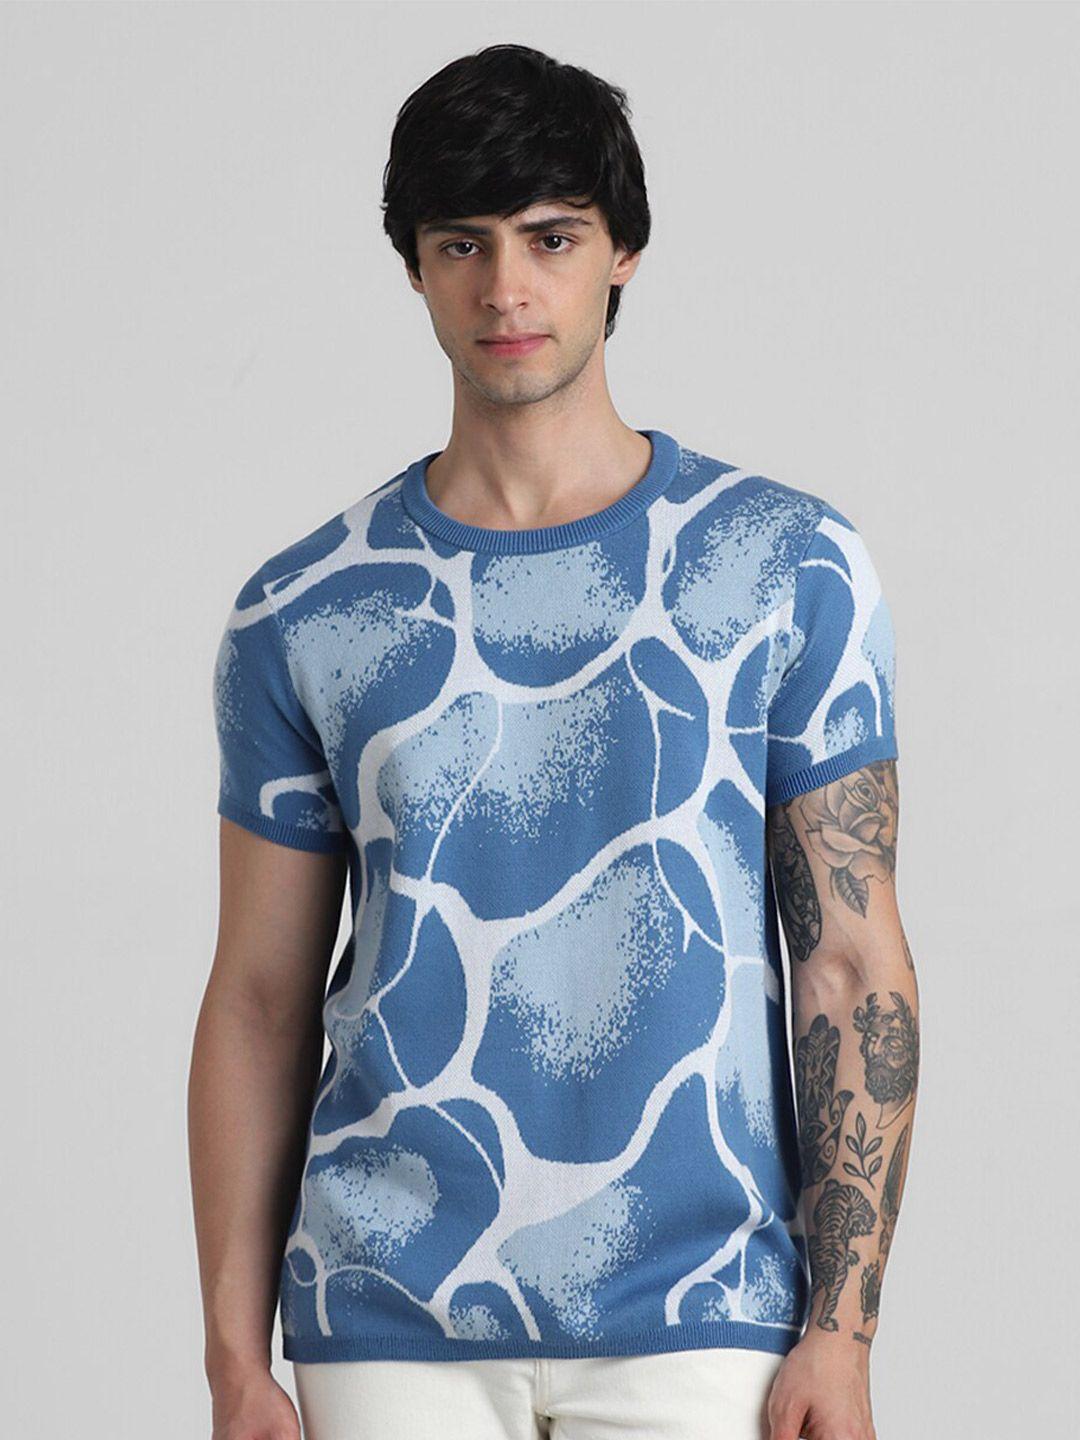 jack & jones abstract printed cotton t-shirt